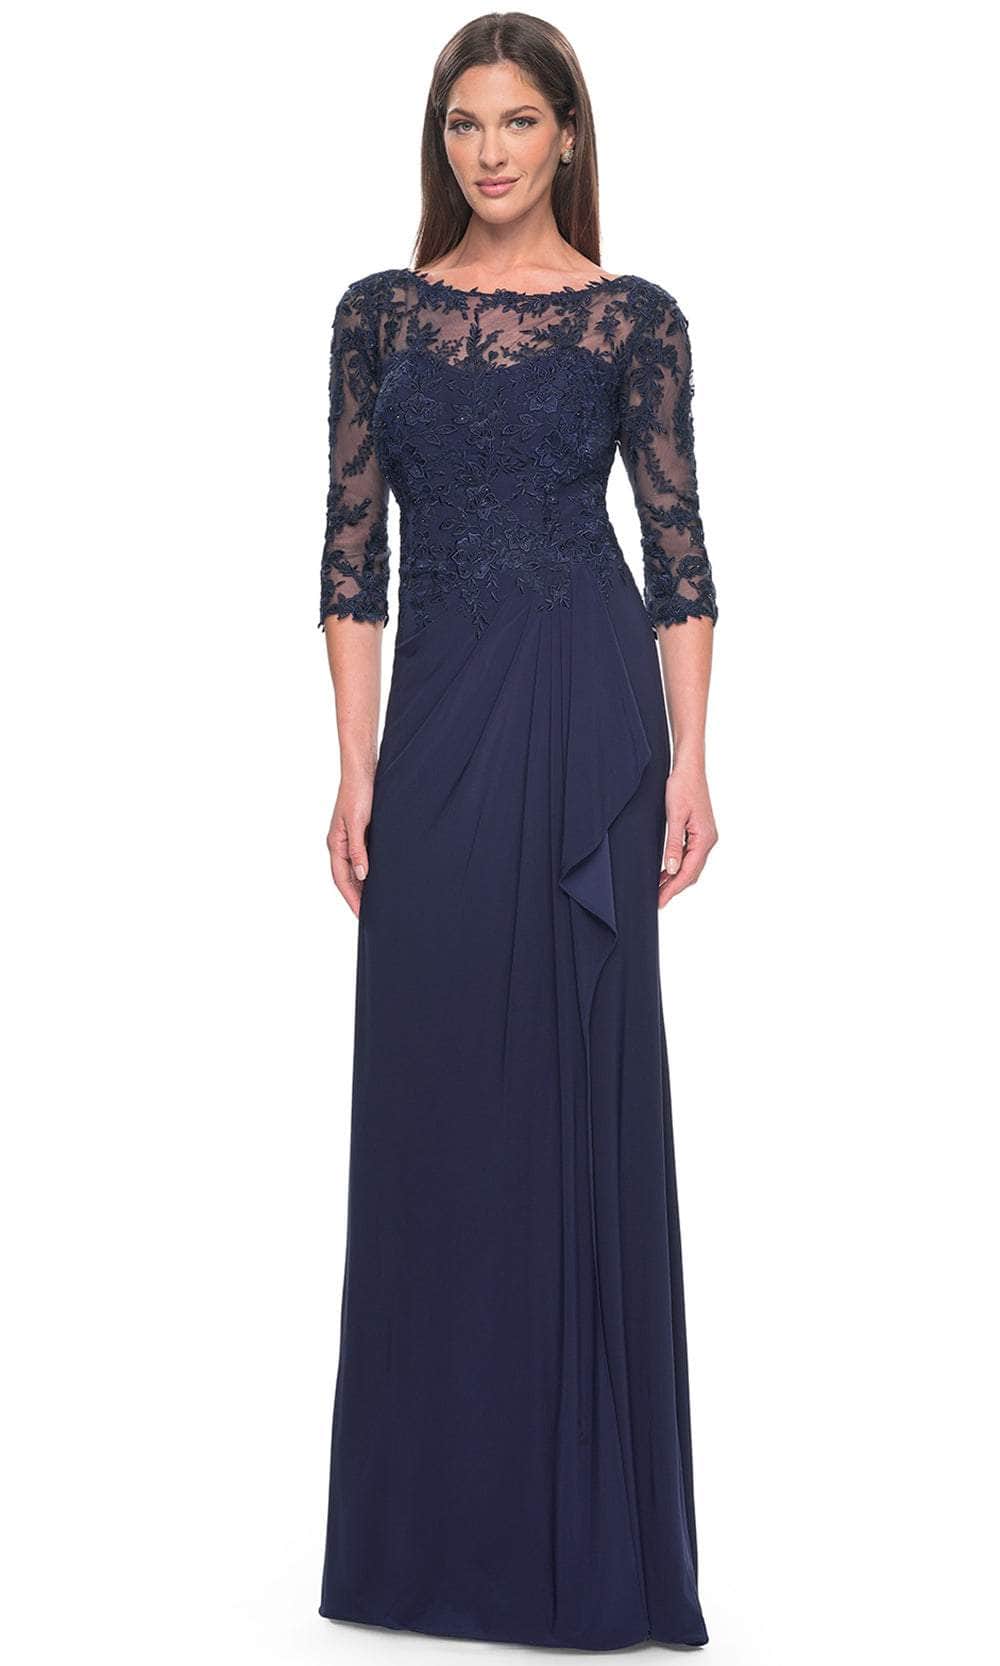 Image of La Femme 30385 - Illusion Bateau Evening Dress